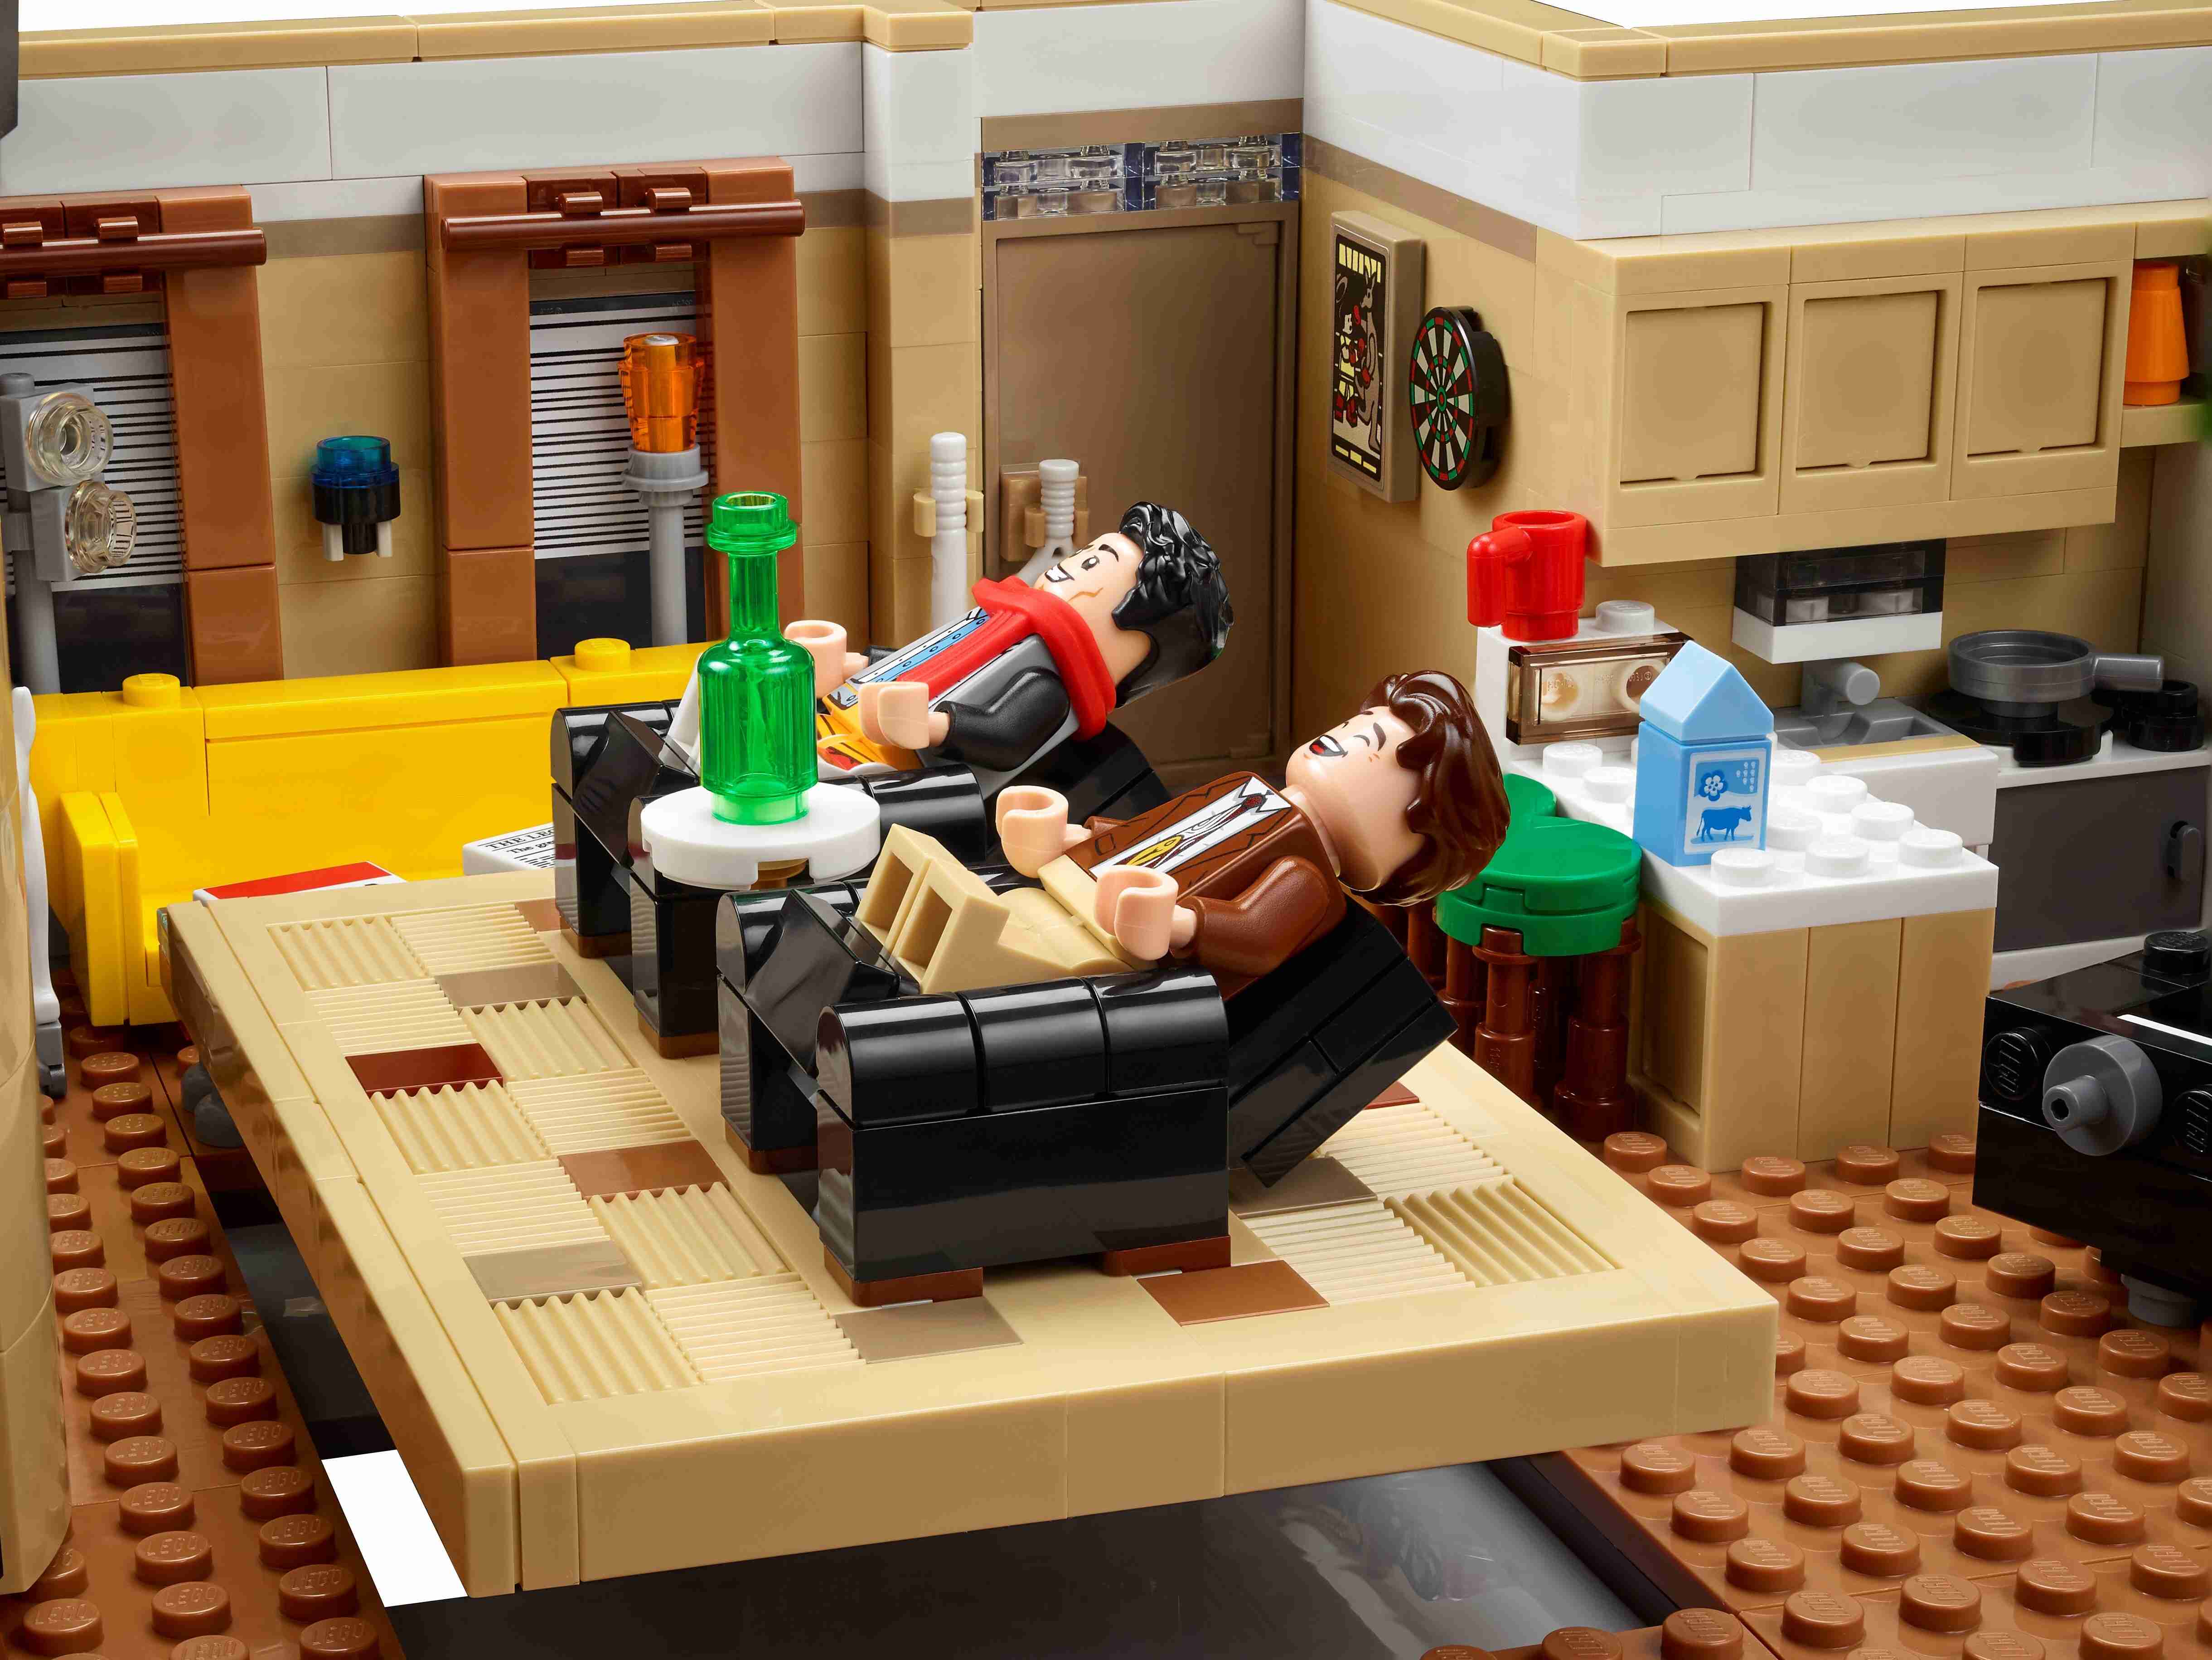 LEGO 10292 Ideas - Friends Apartments